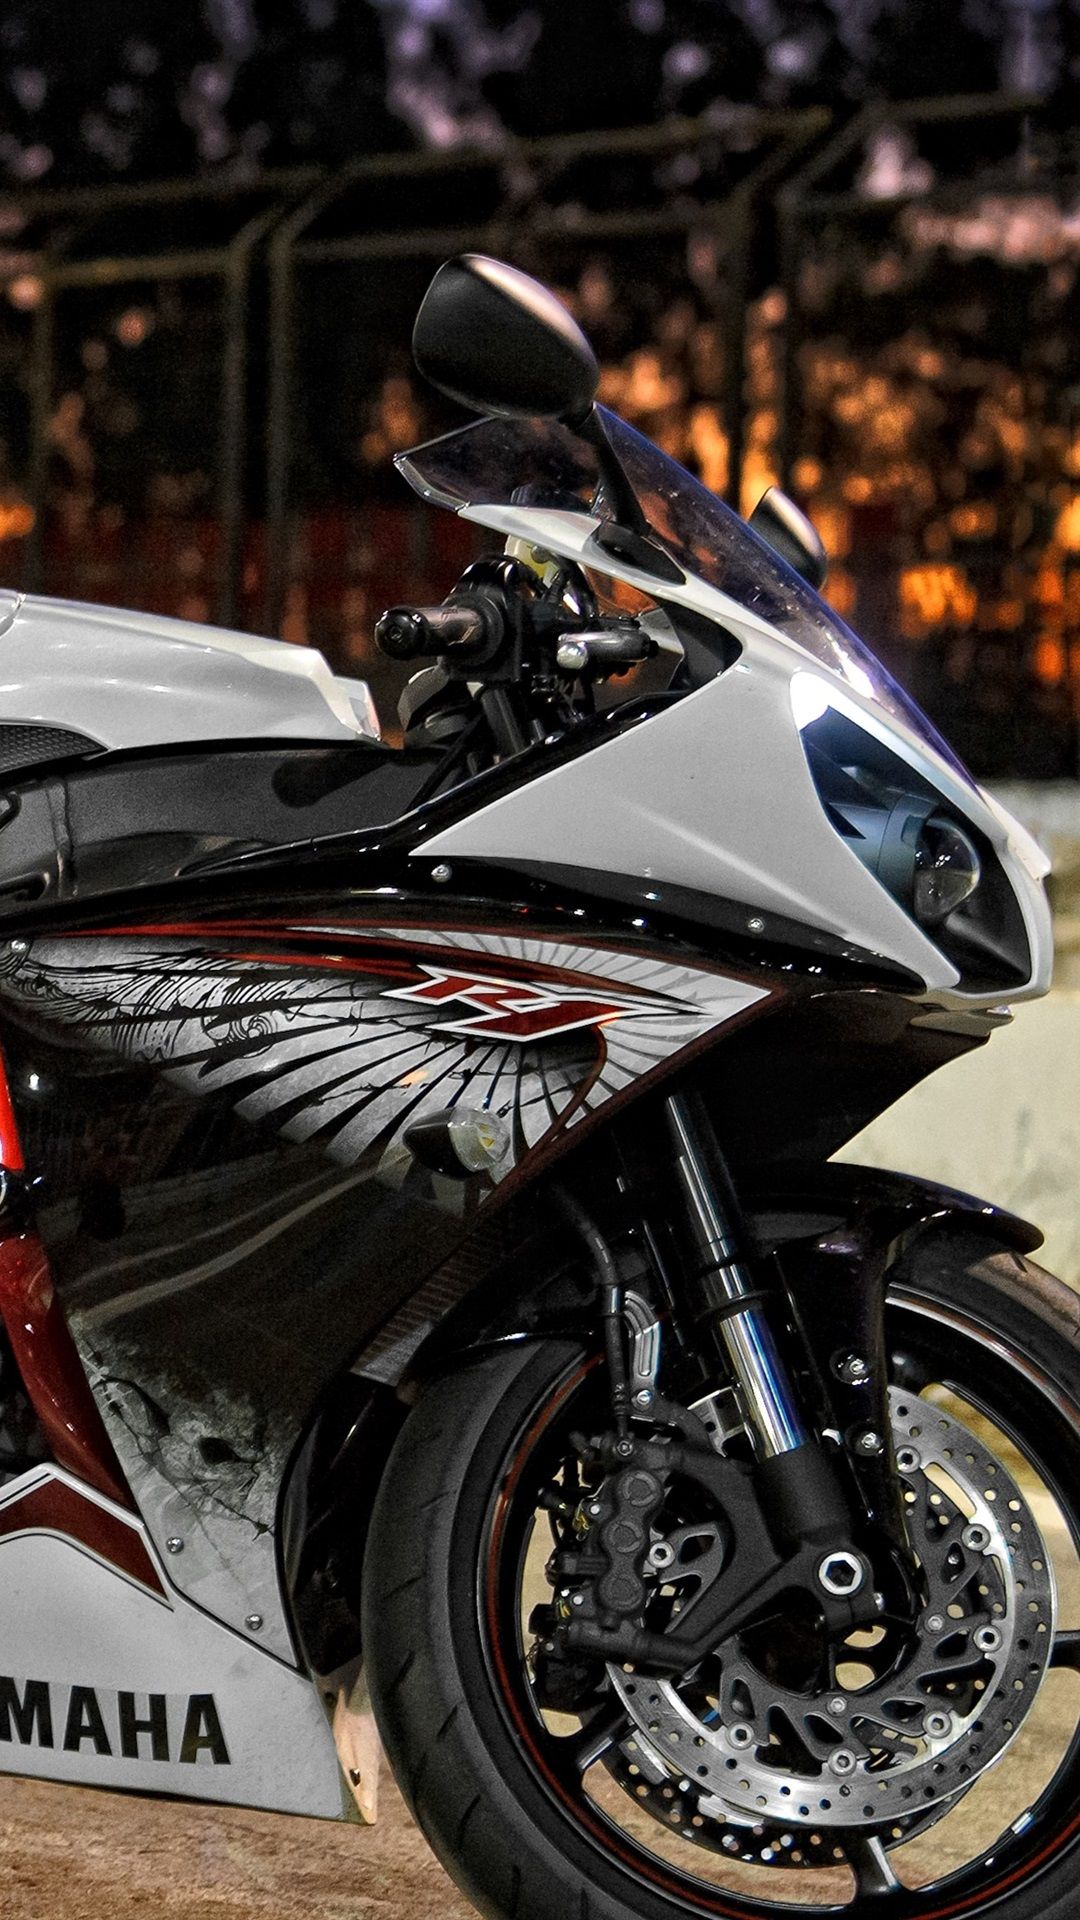 Yamaha Motorcycle At Night City Street 1080x1920 IPhone 8 7 6 6S